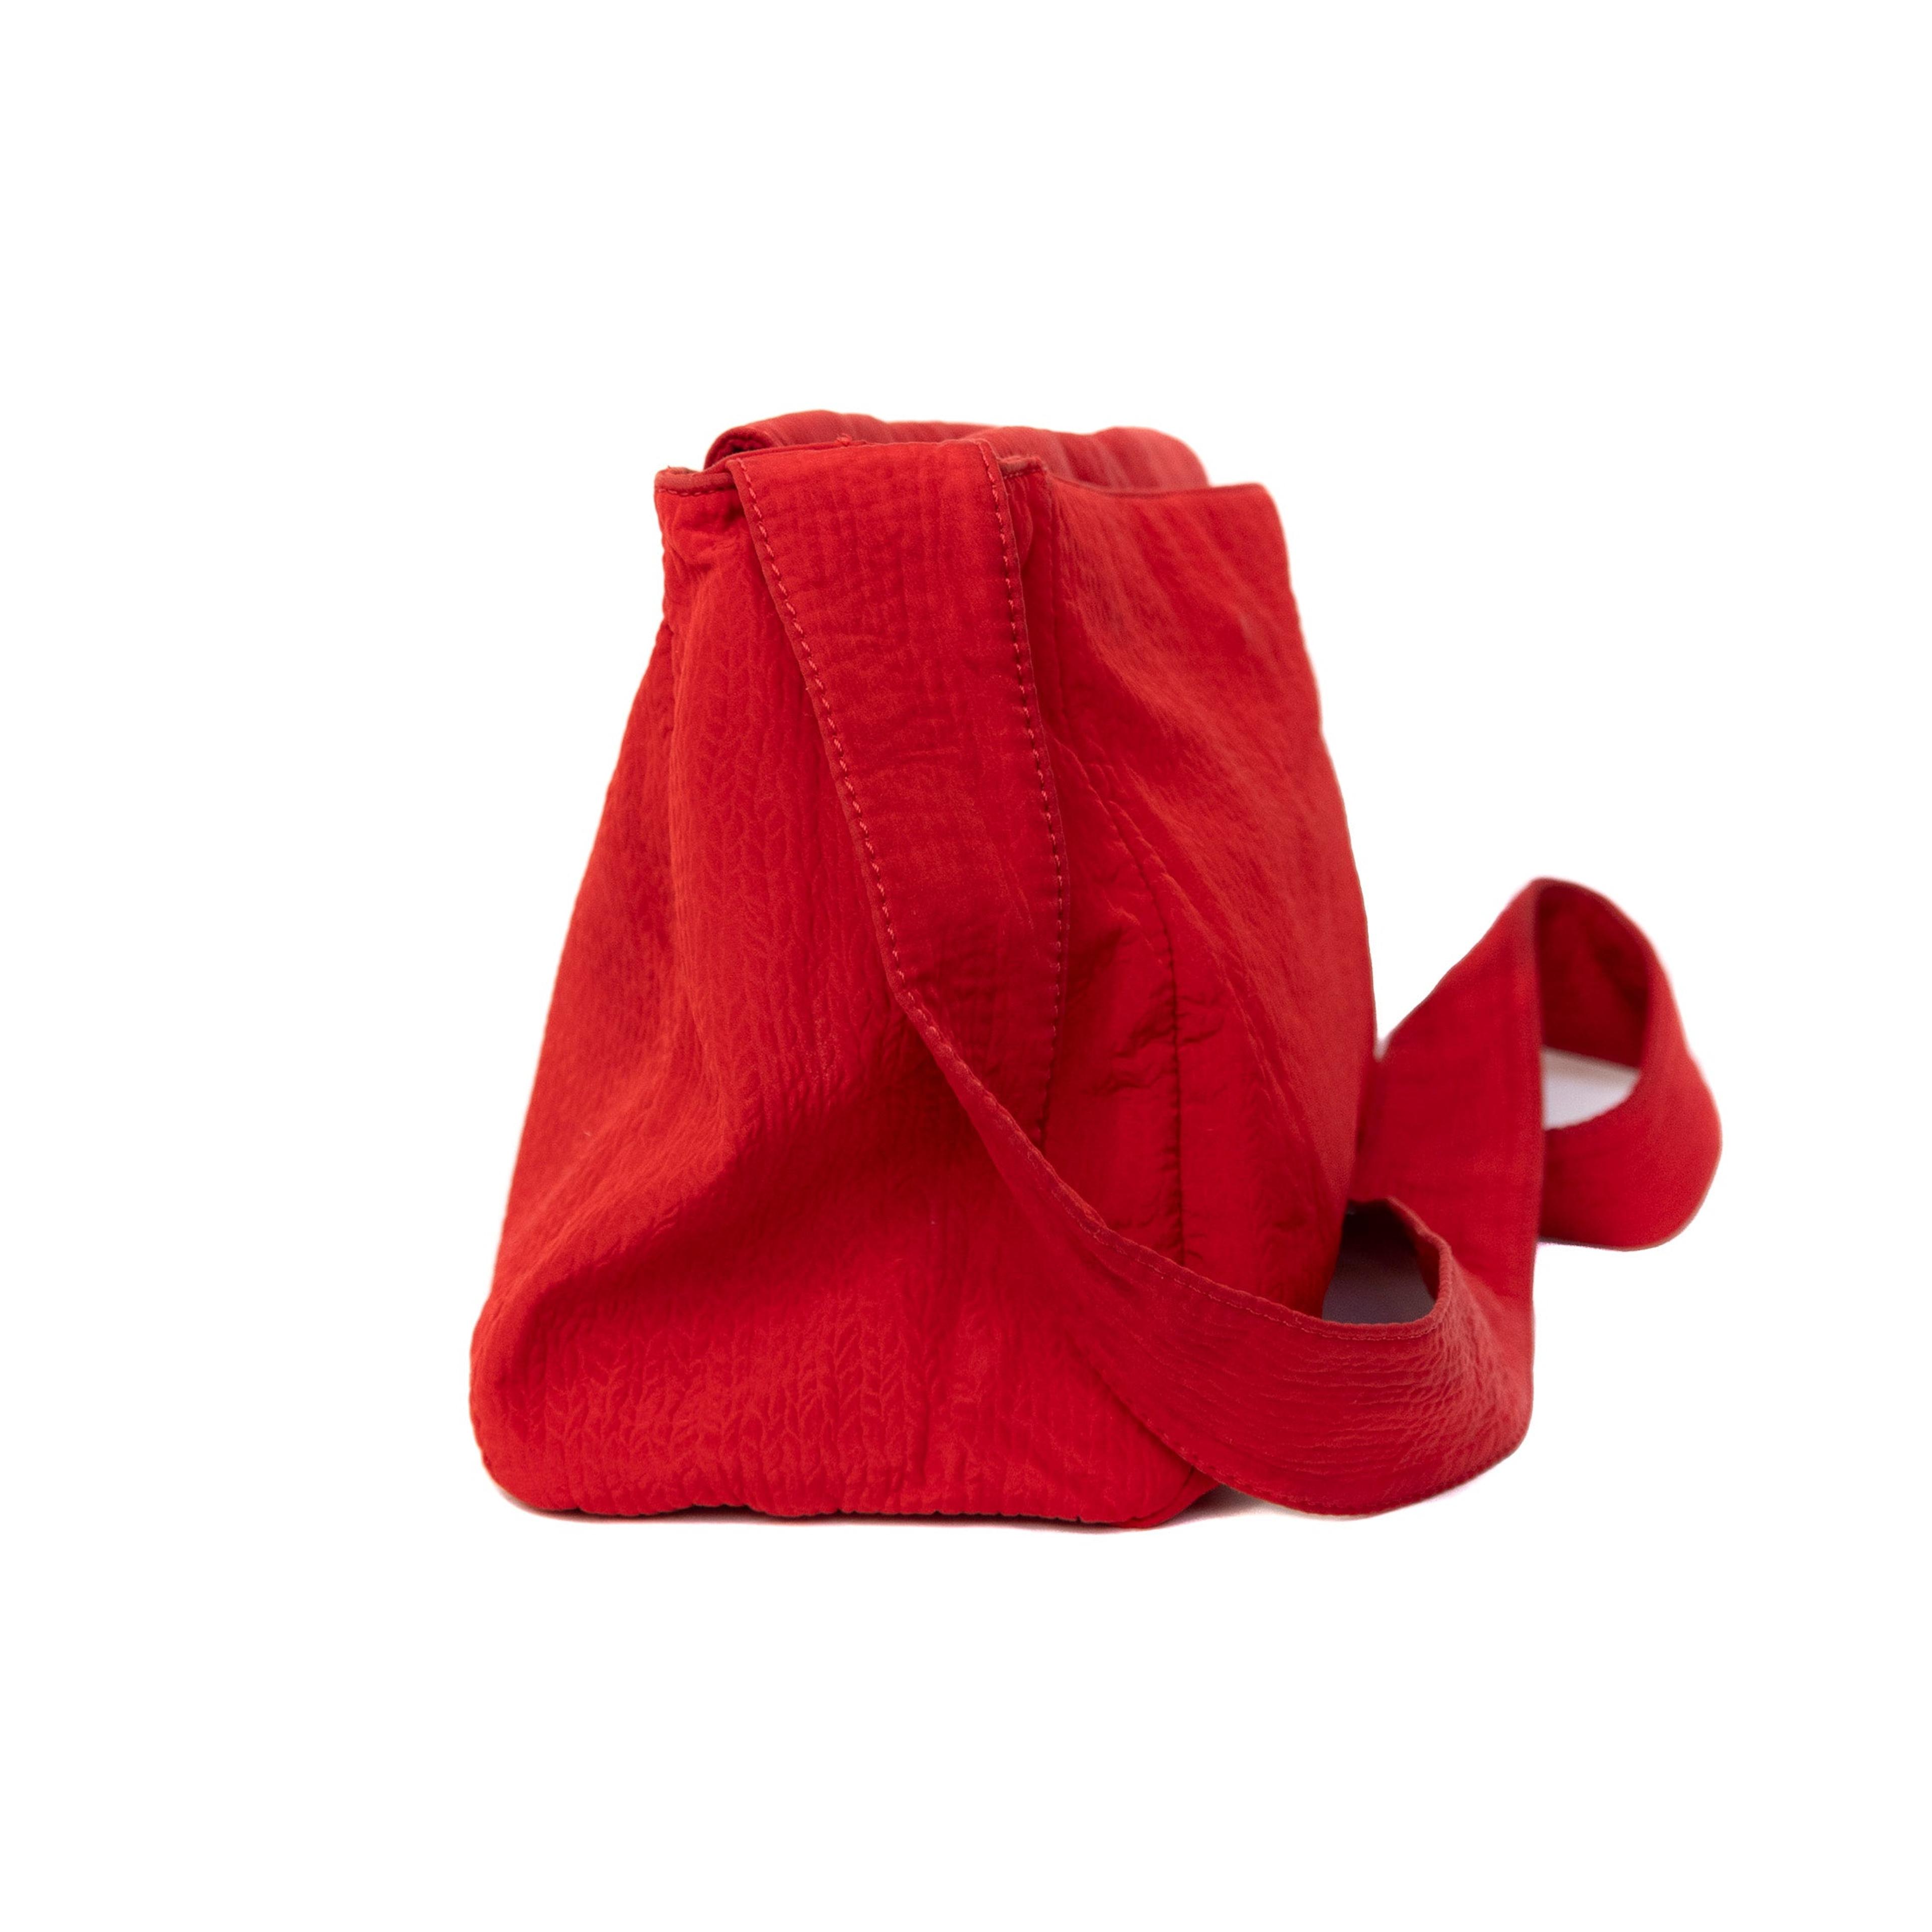 Alternate View 3 of Missoni Red Soft Cross Body Bag